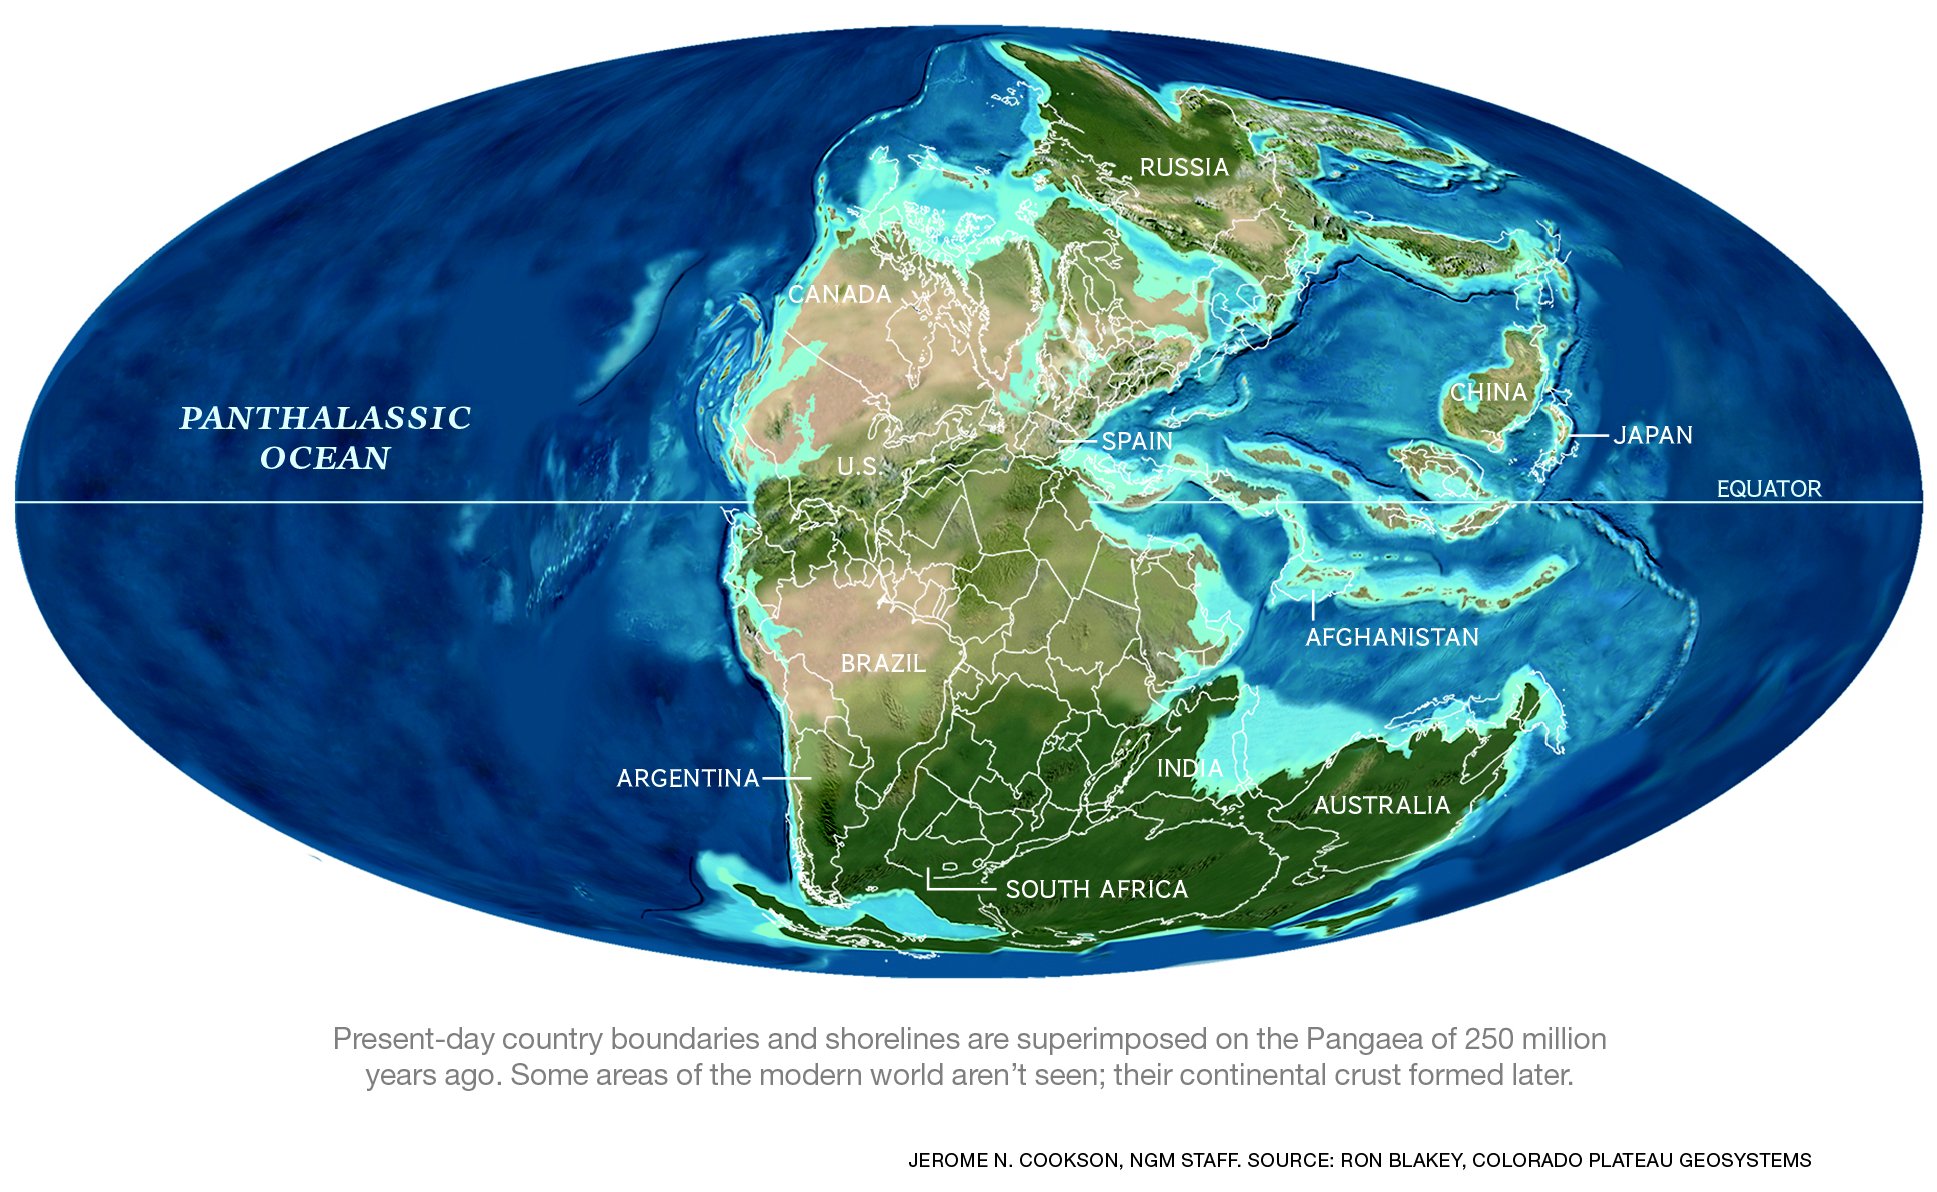 Древний океан 5 букв. Древние материки. Океан Тетис. Океан Тетис на карте. Древний океан Тетис на карте.